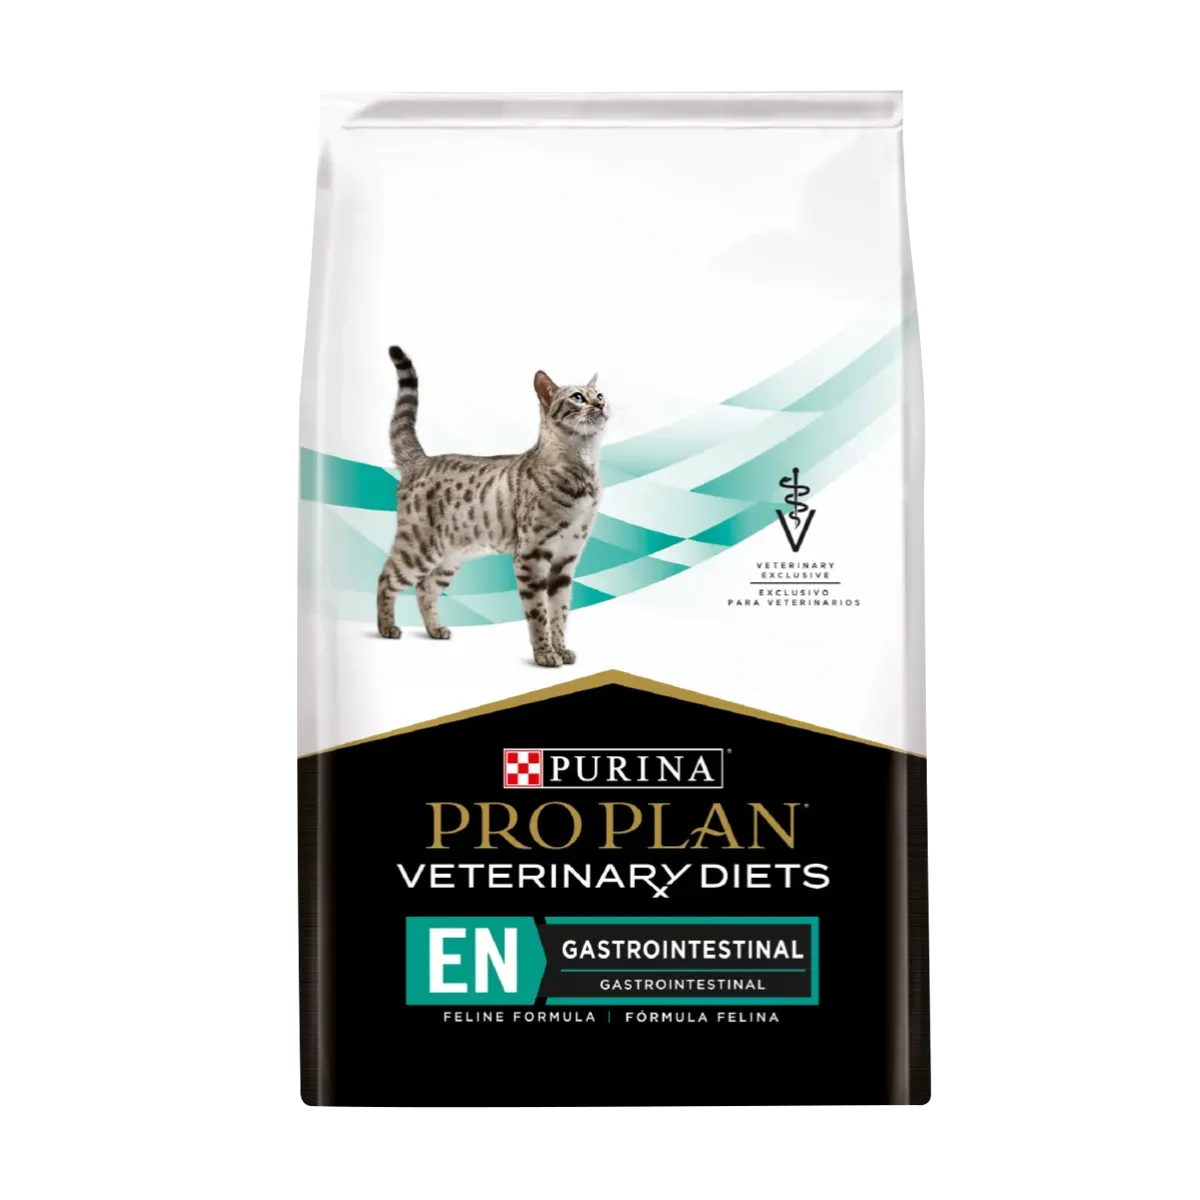 purina-pro-plan-veterinay-diets-cat-en-gastrointestinal.webp